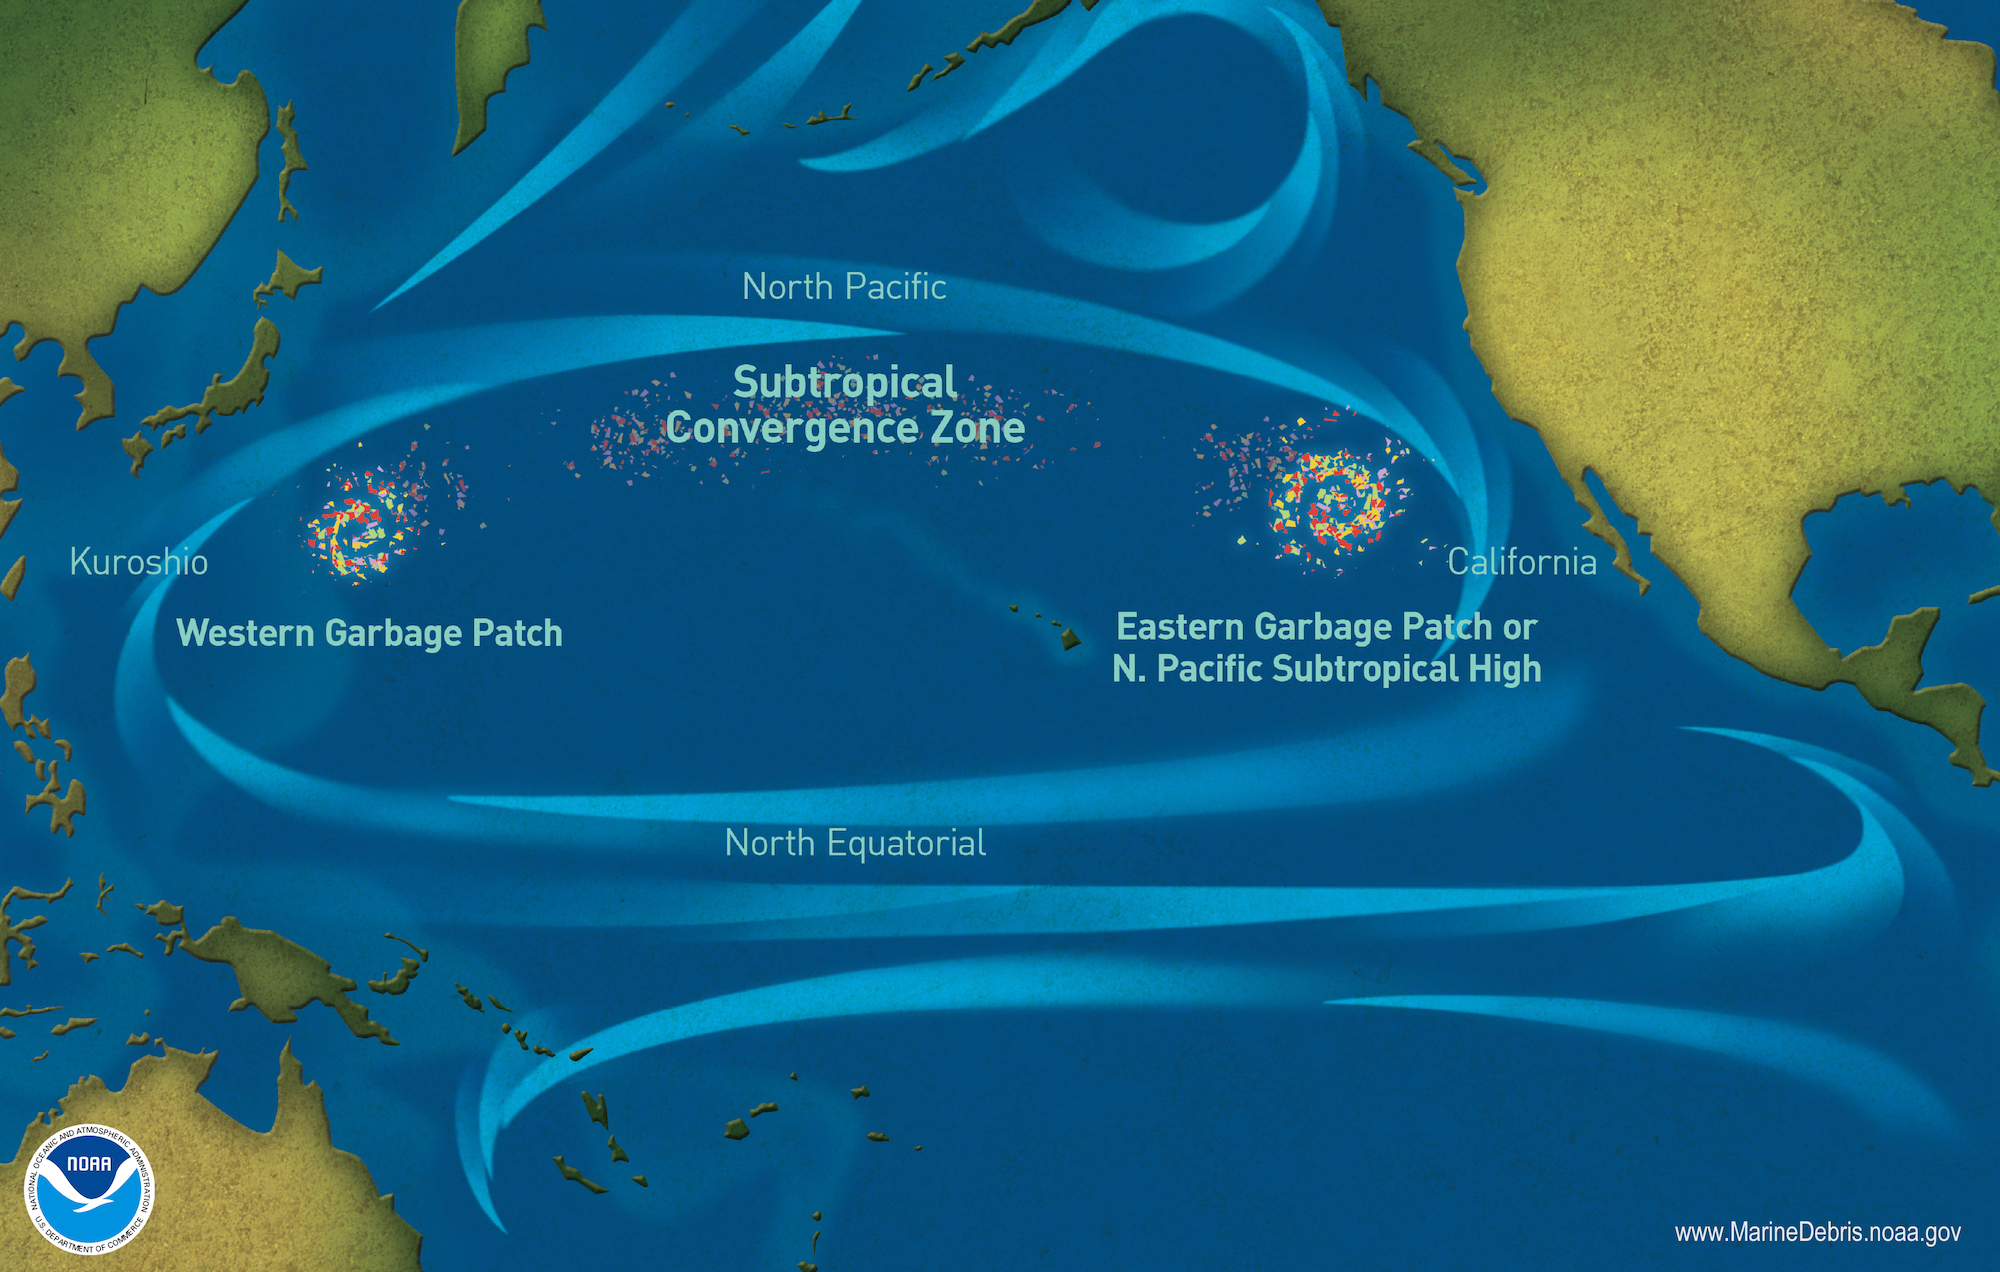 Map of marine debris accumulation locations in the North Pacific Ocean